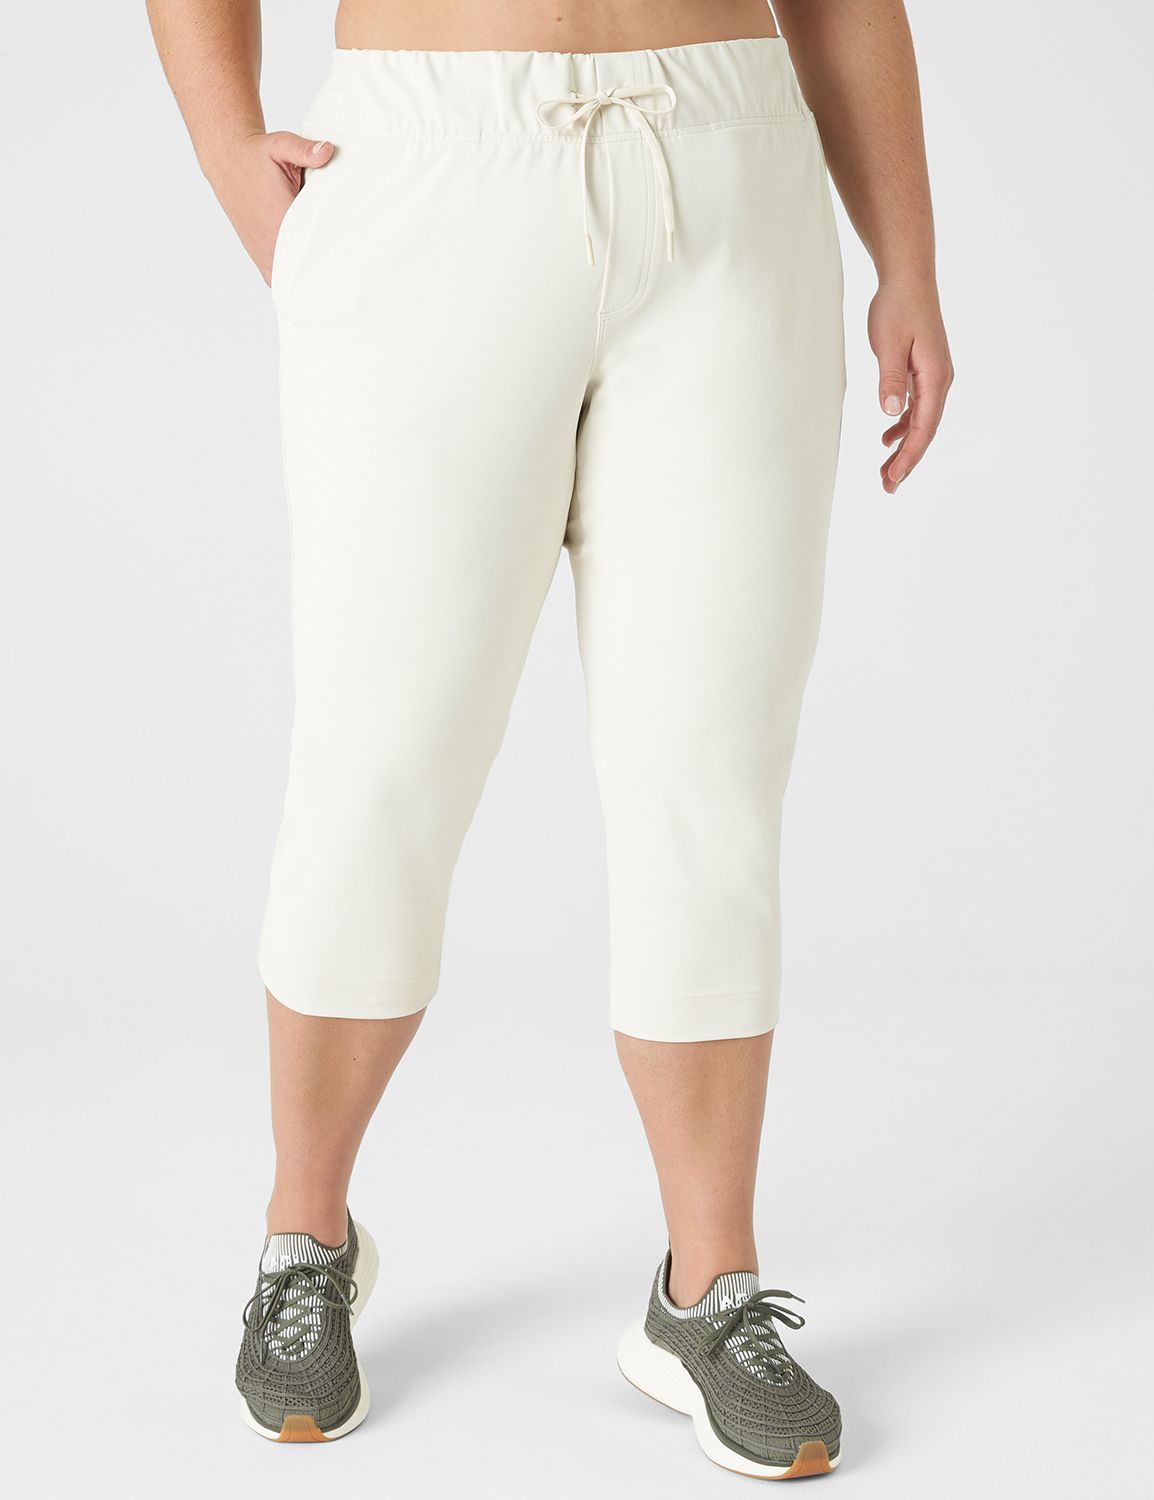 LANE BRYANT NEW Linen Capri Pants White Plus Size 26/28 Relaxed Casual